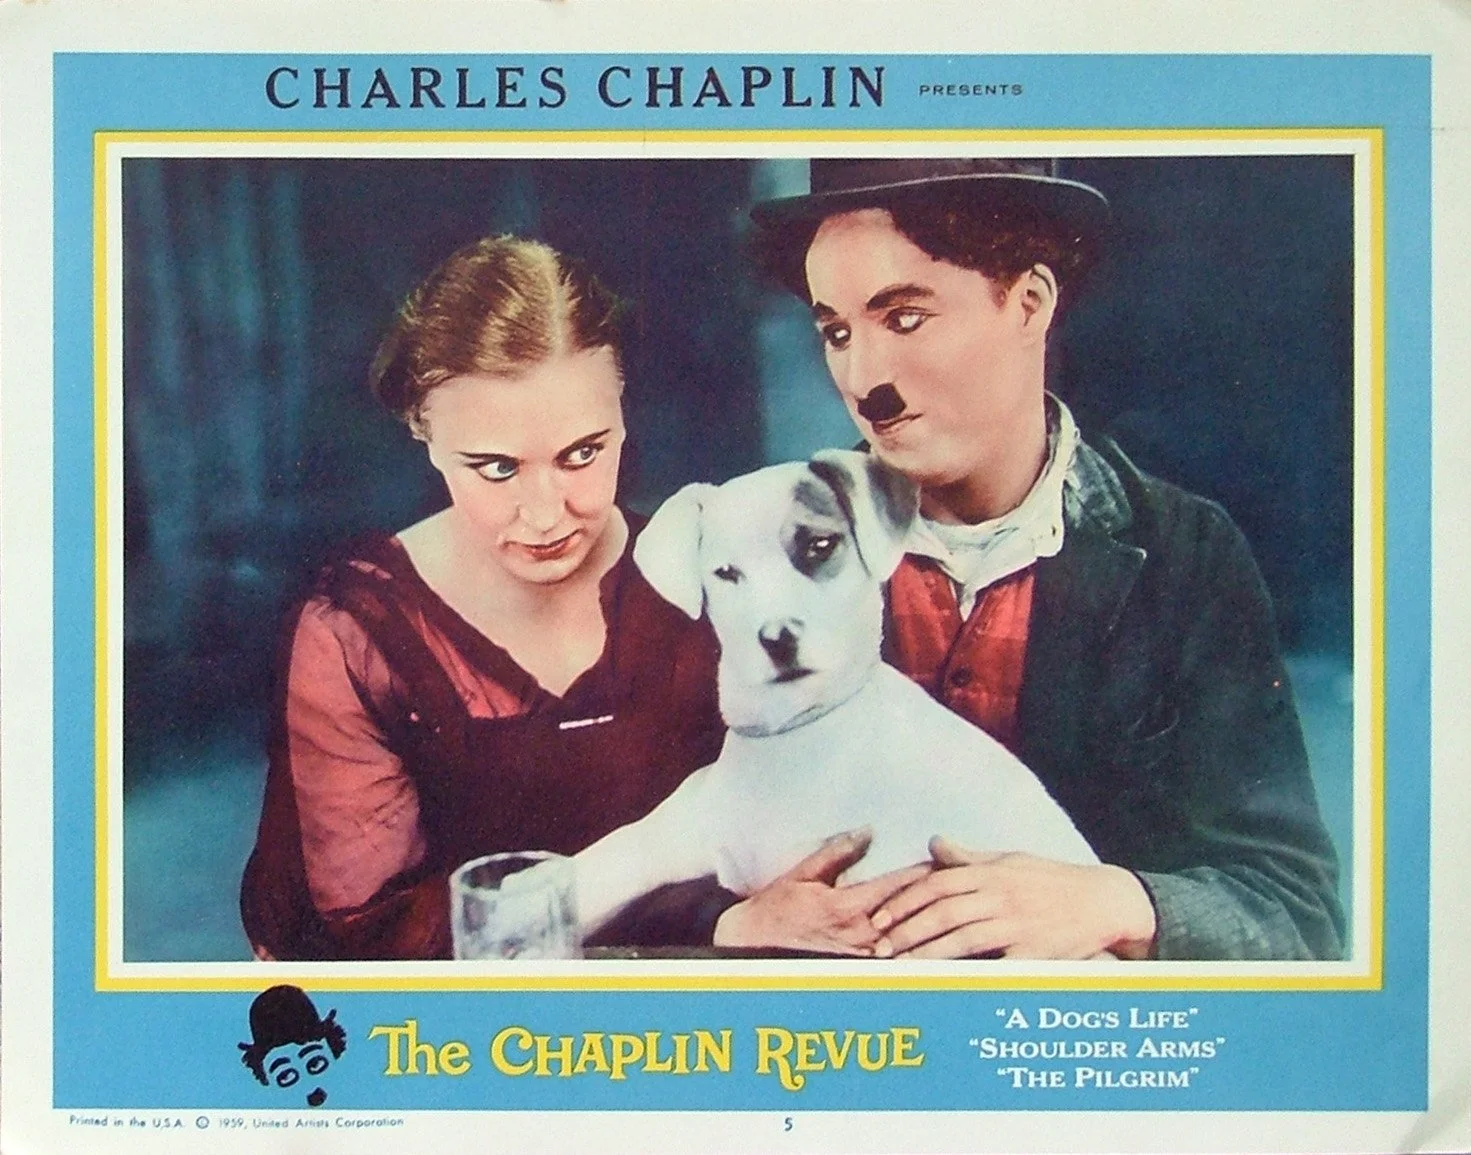 Original vintage cinema lobby card movie poster for Charlie Chaplin's comedy classic, The Chaplin Revue